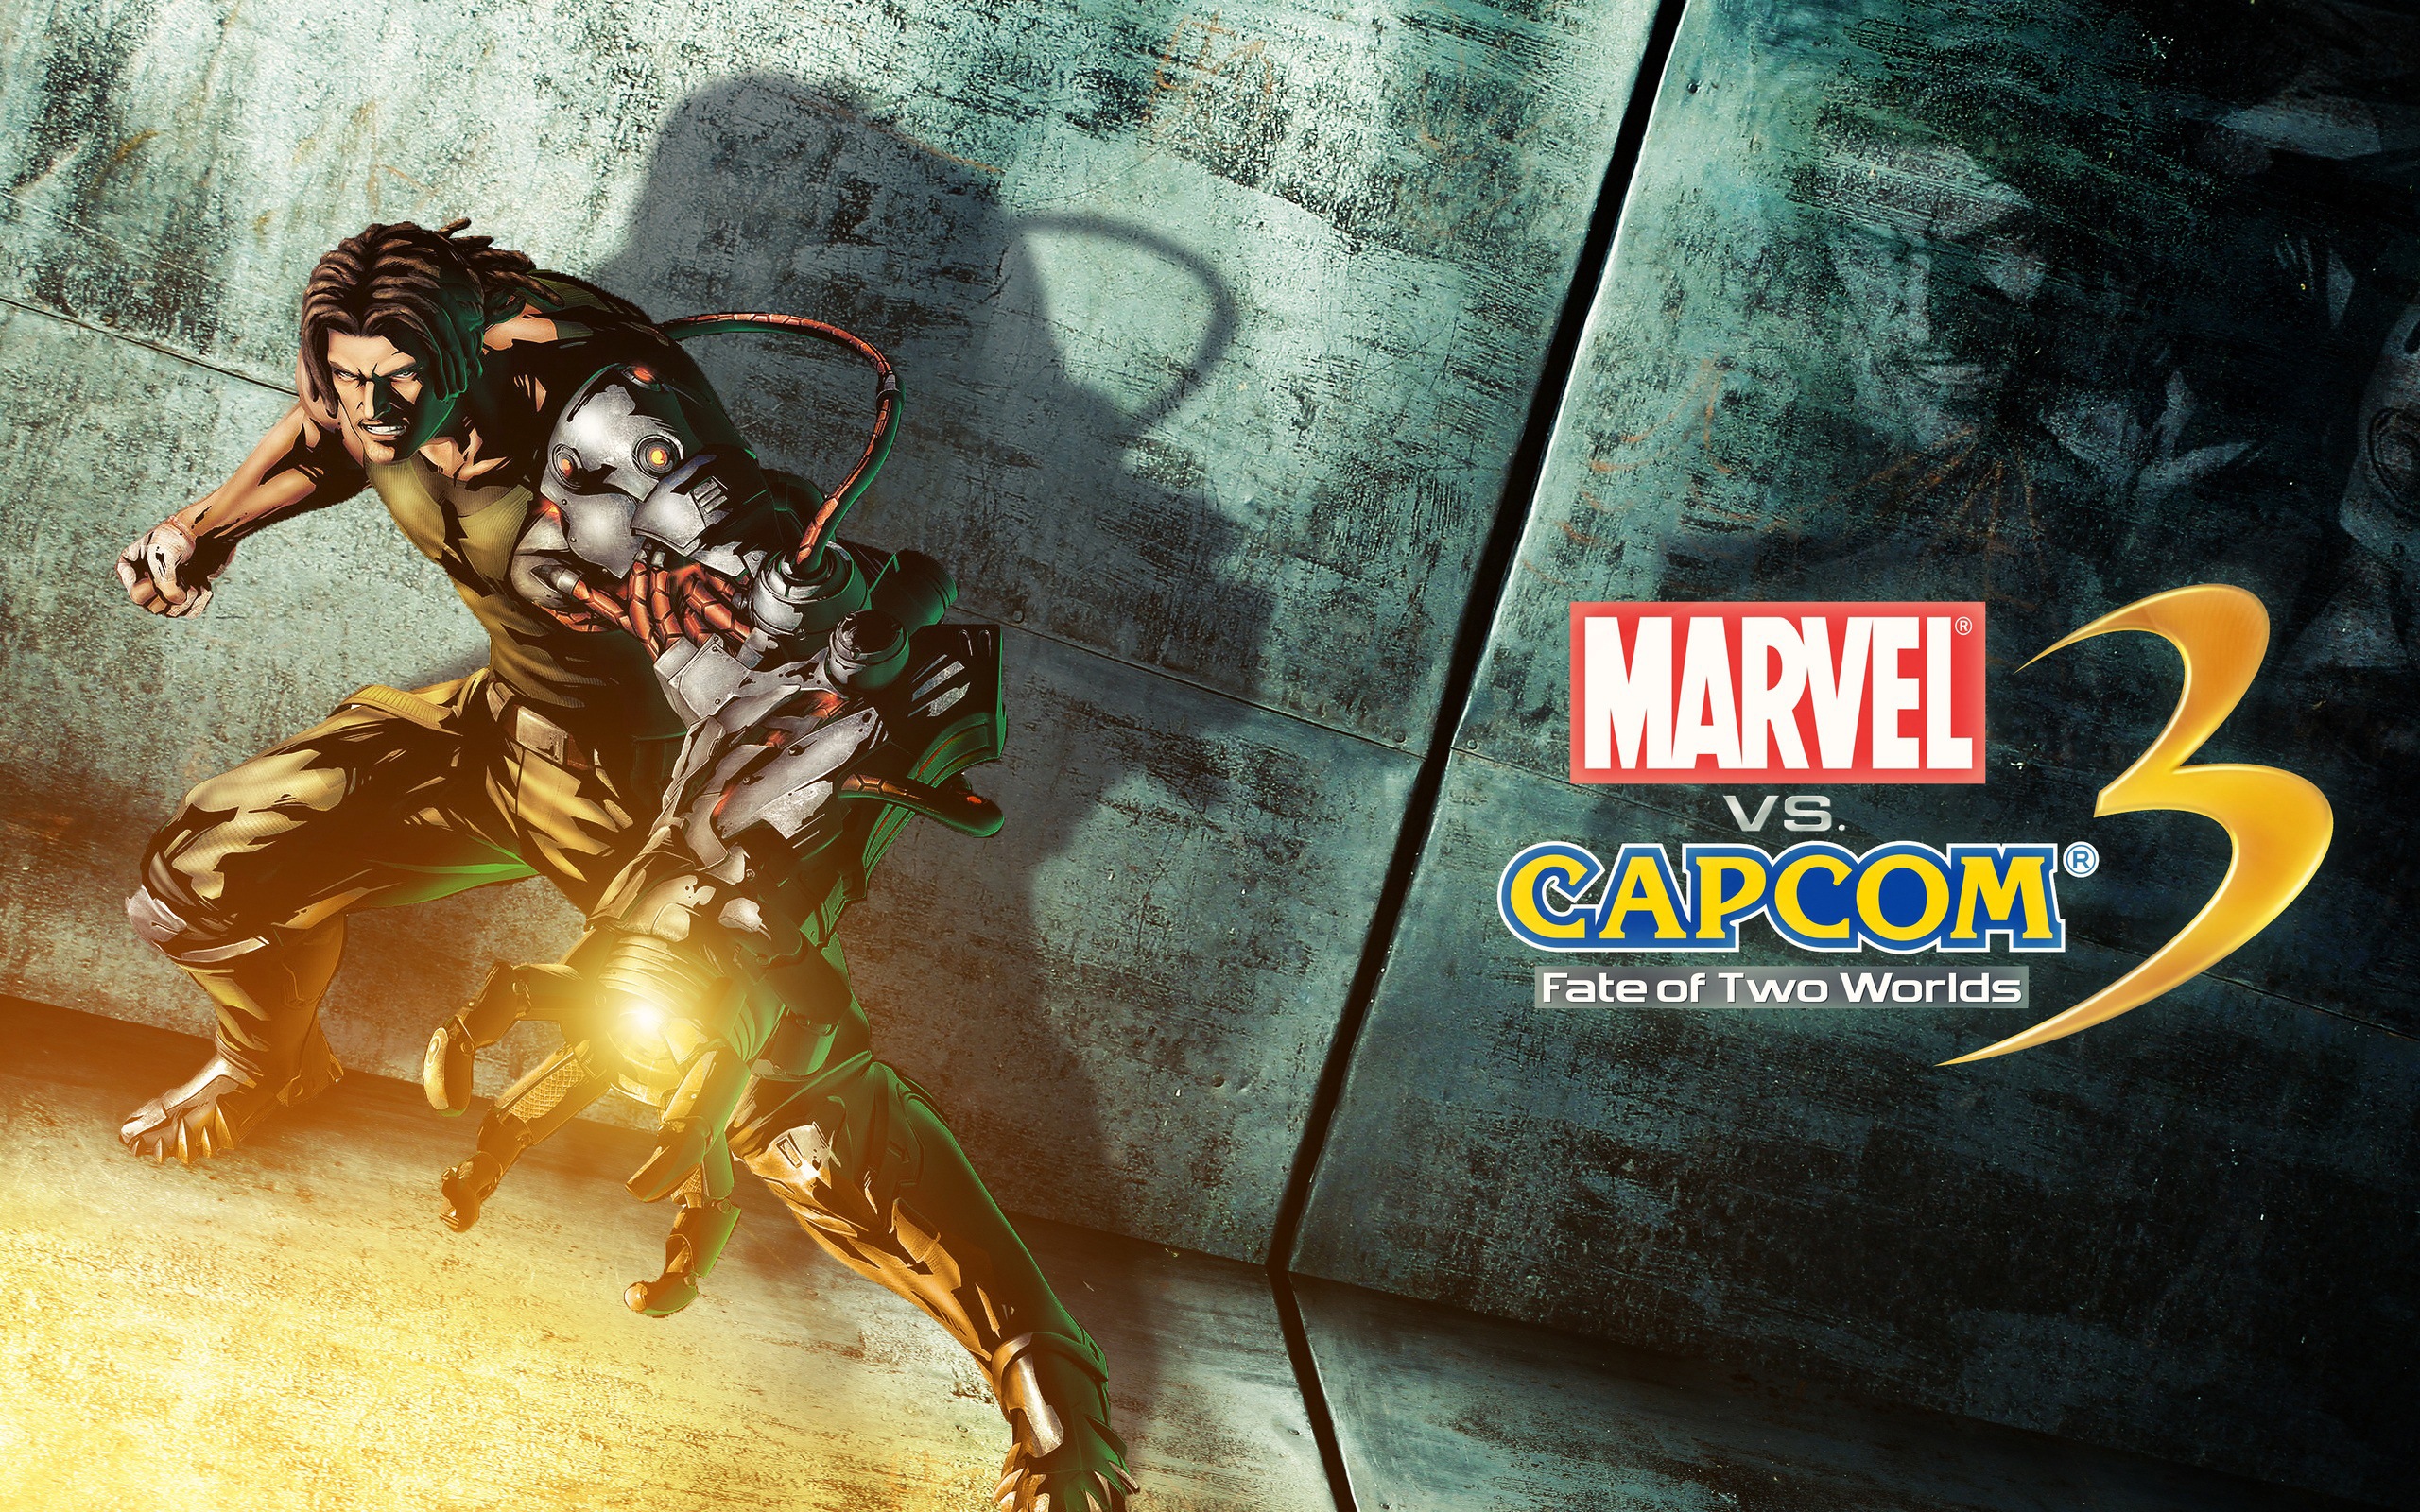 Marvel VS. Capcom 3: Fate of Two Worlds 漫畫英雄VS.卡普空3 高清遊戲壁紙 #8 - 2560x1600